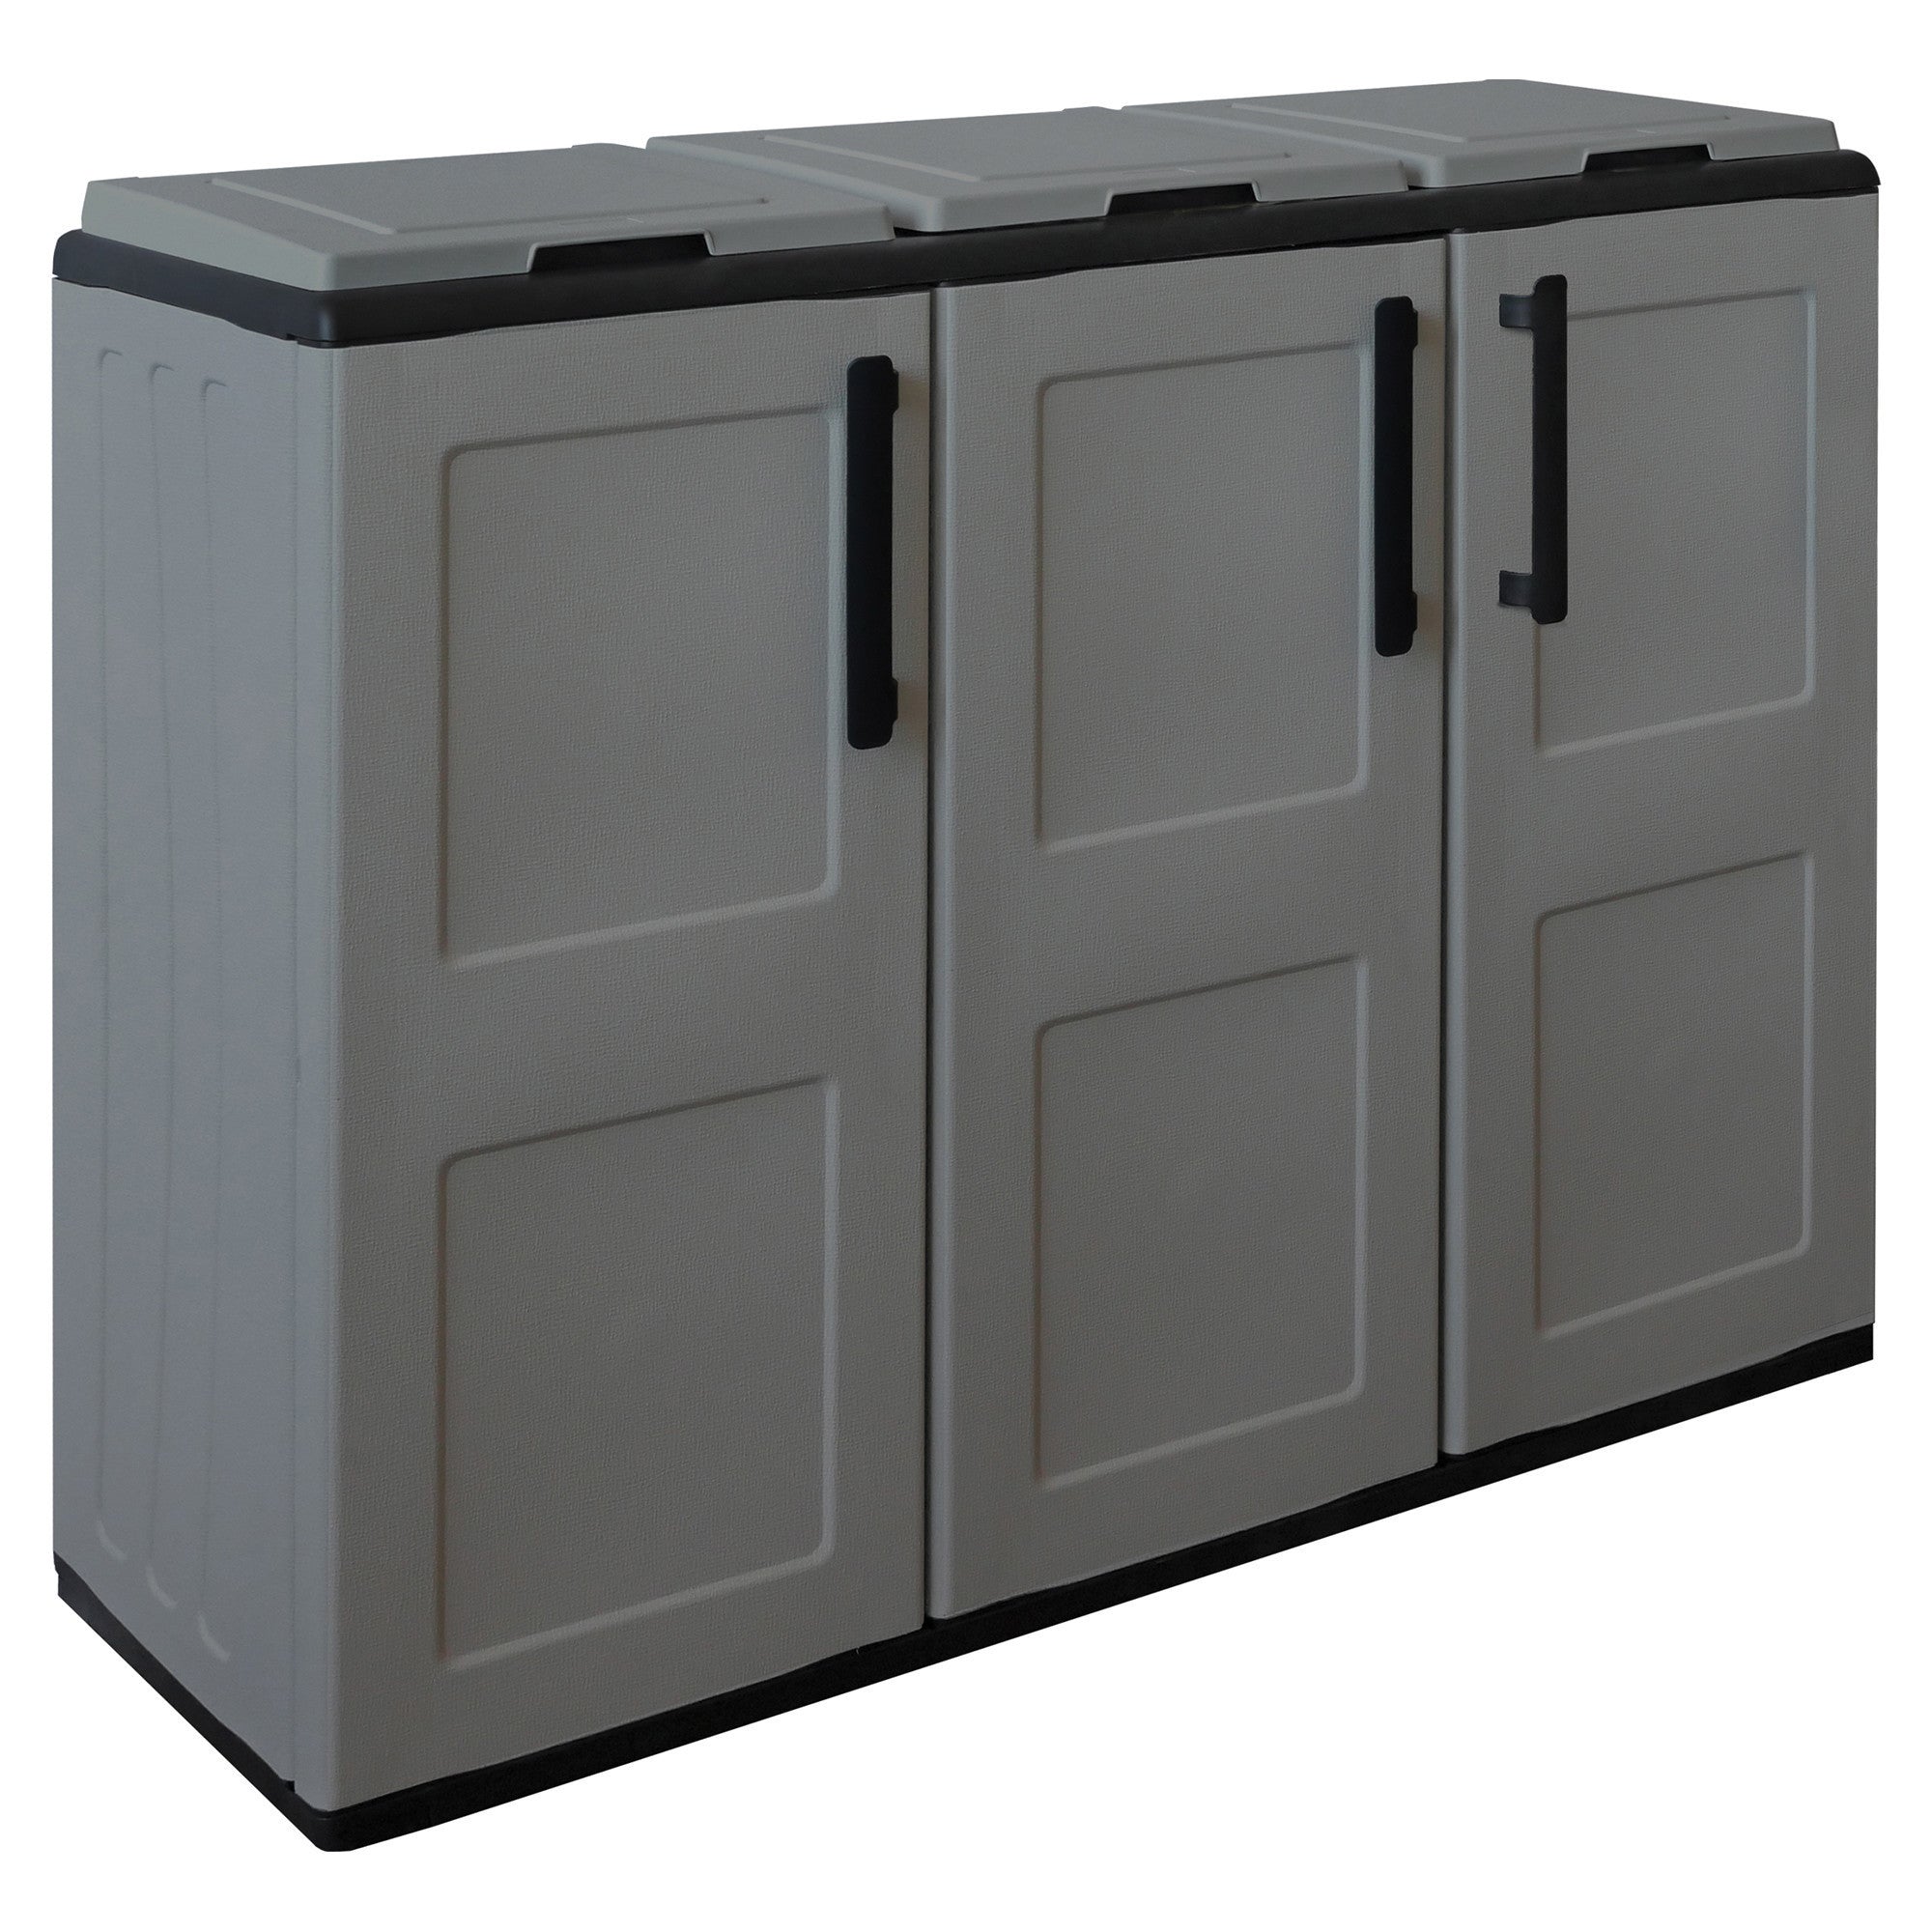 TECNOMAT Cabinets and lockers